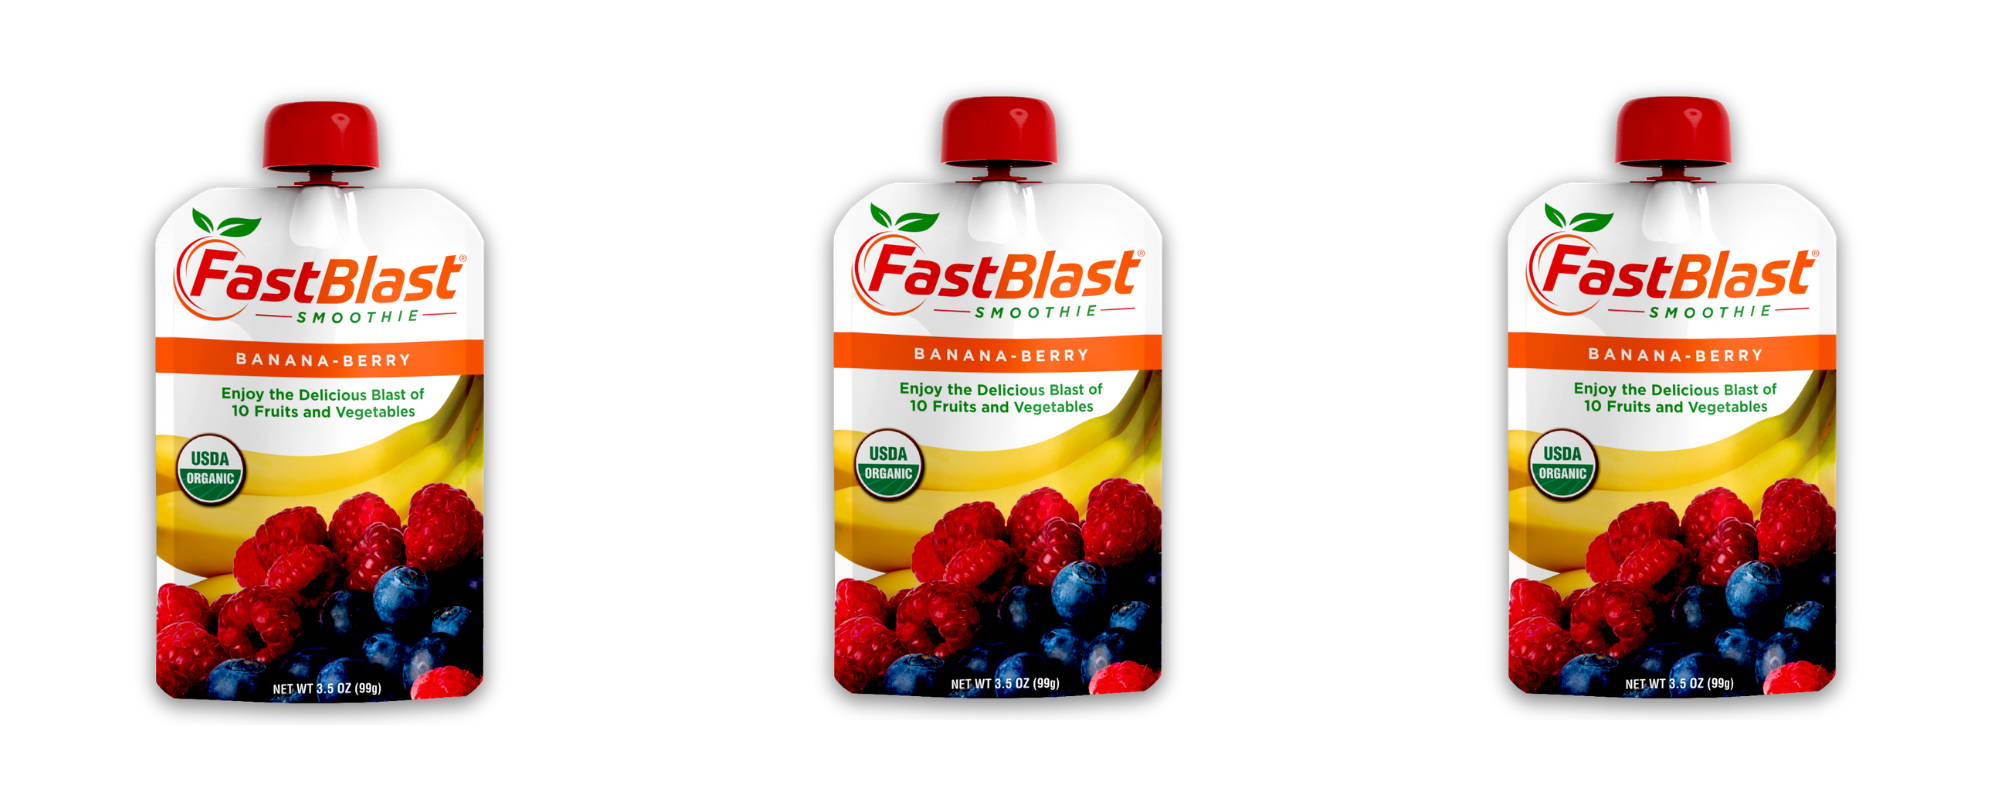 fastblast banana-berry smoothies